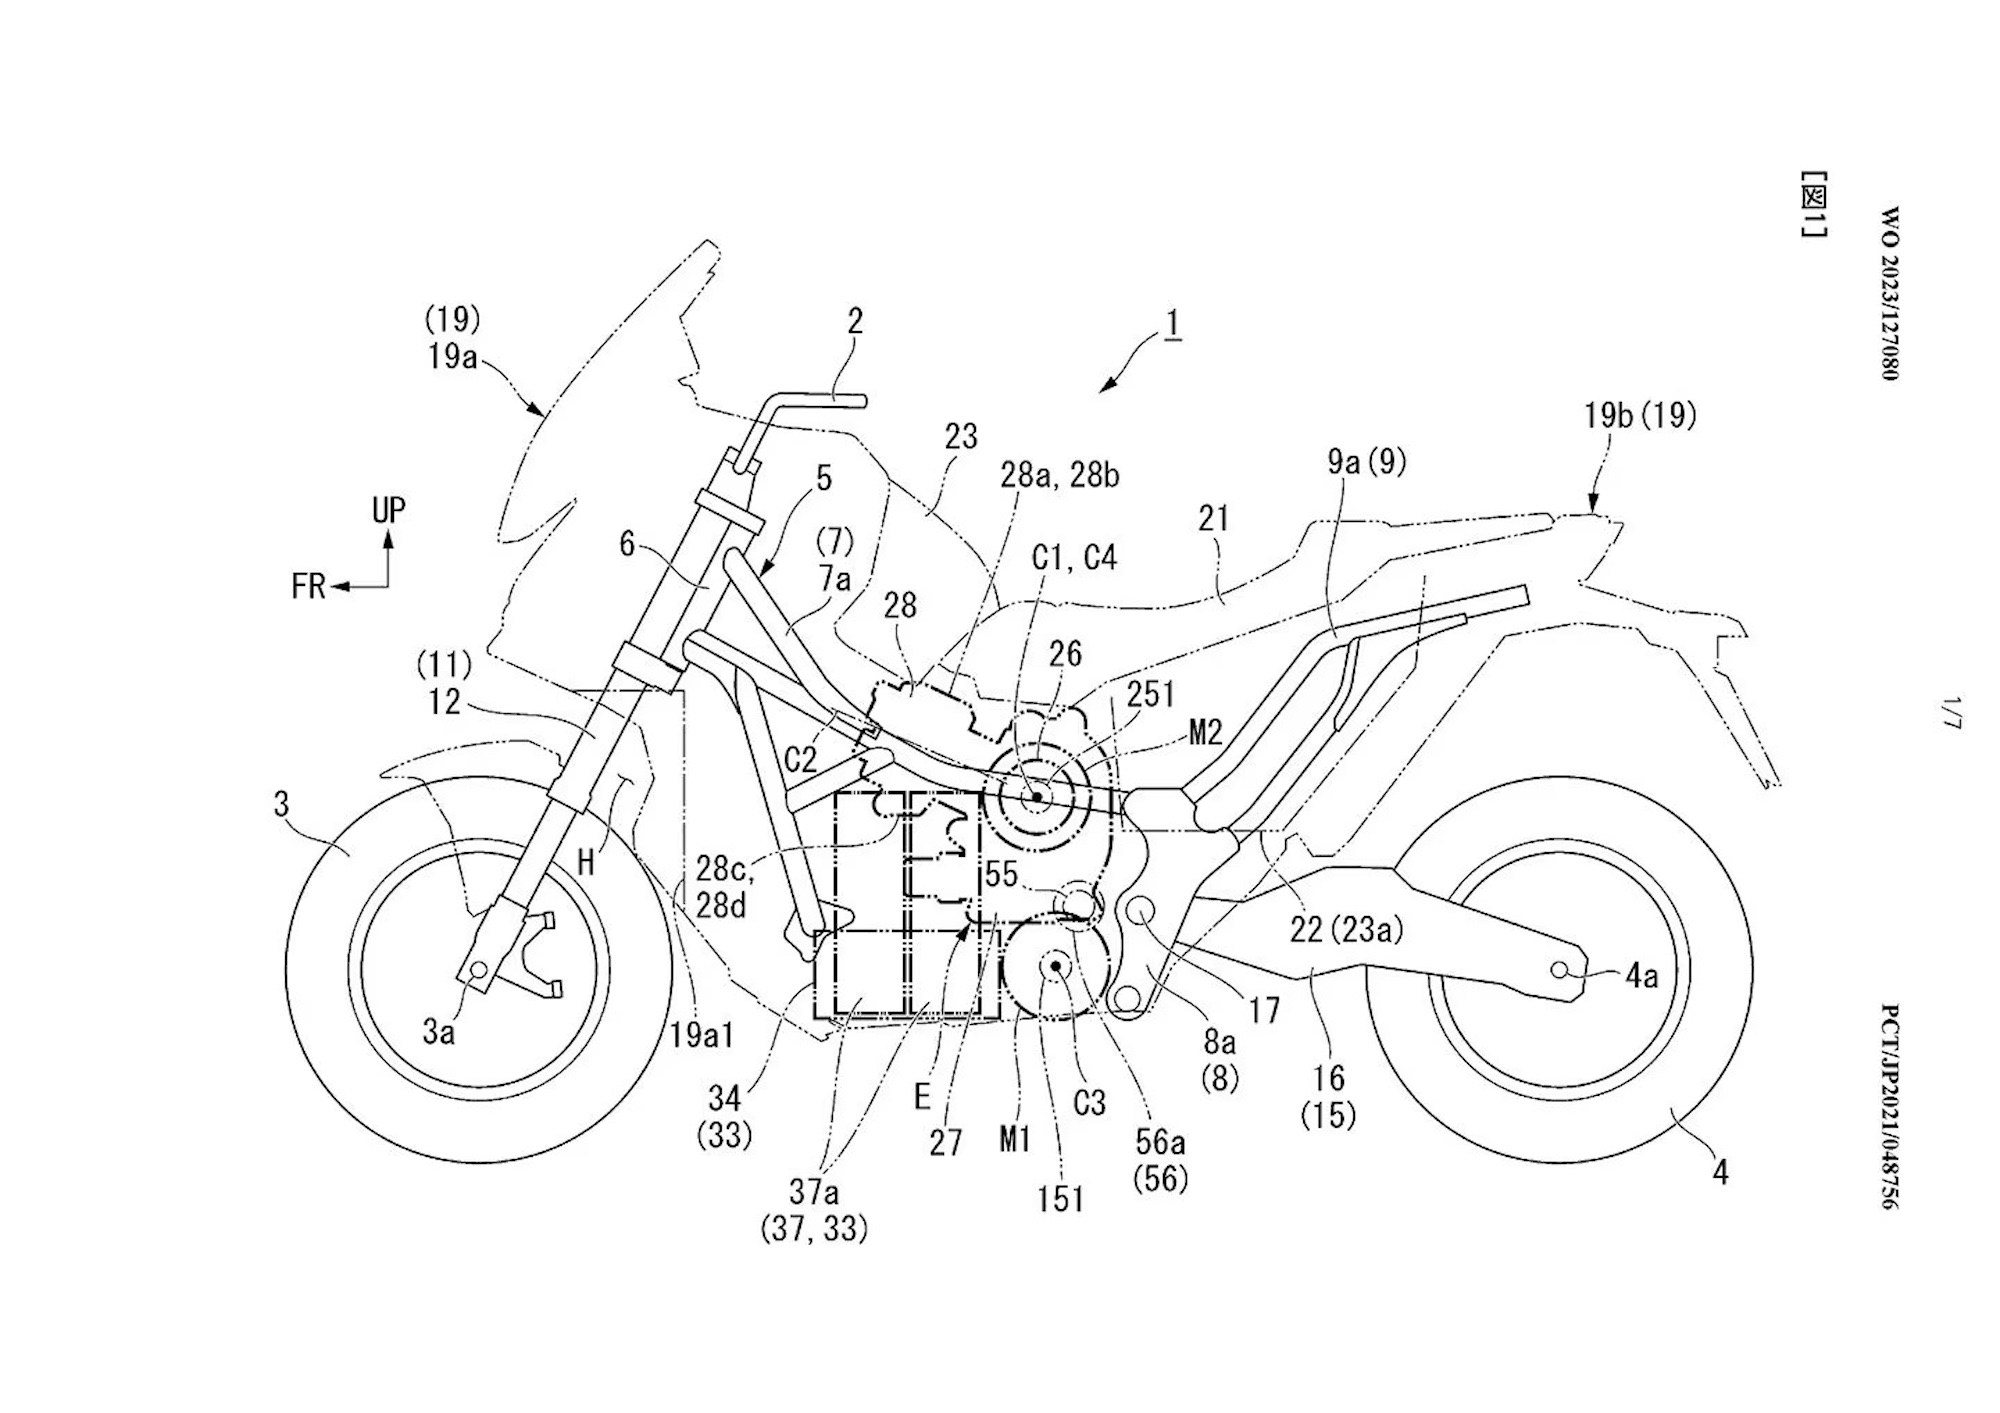 Bike Blueprints: Honda’s Working on a New Kind of Hybrid Motorcycle .